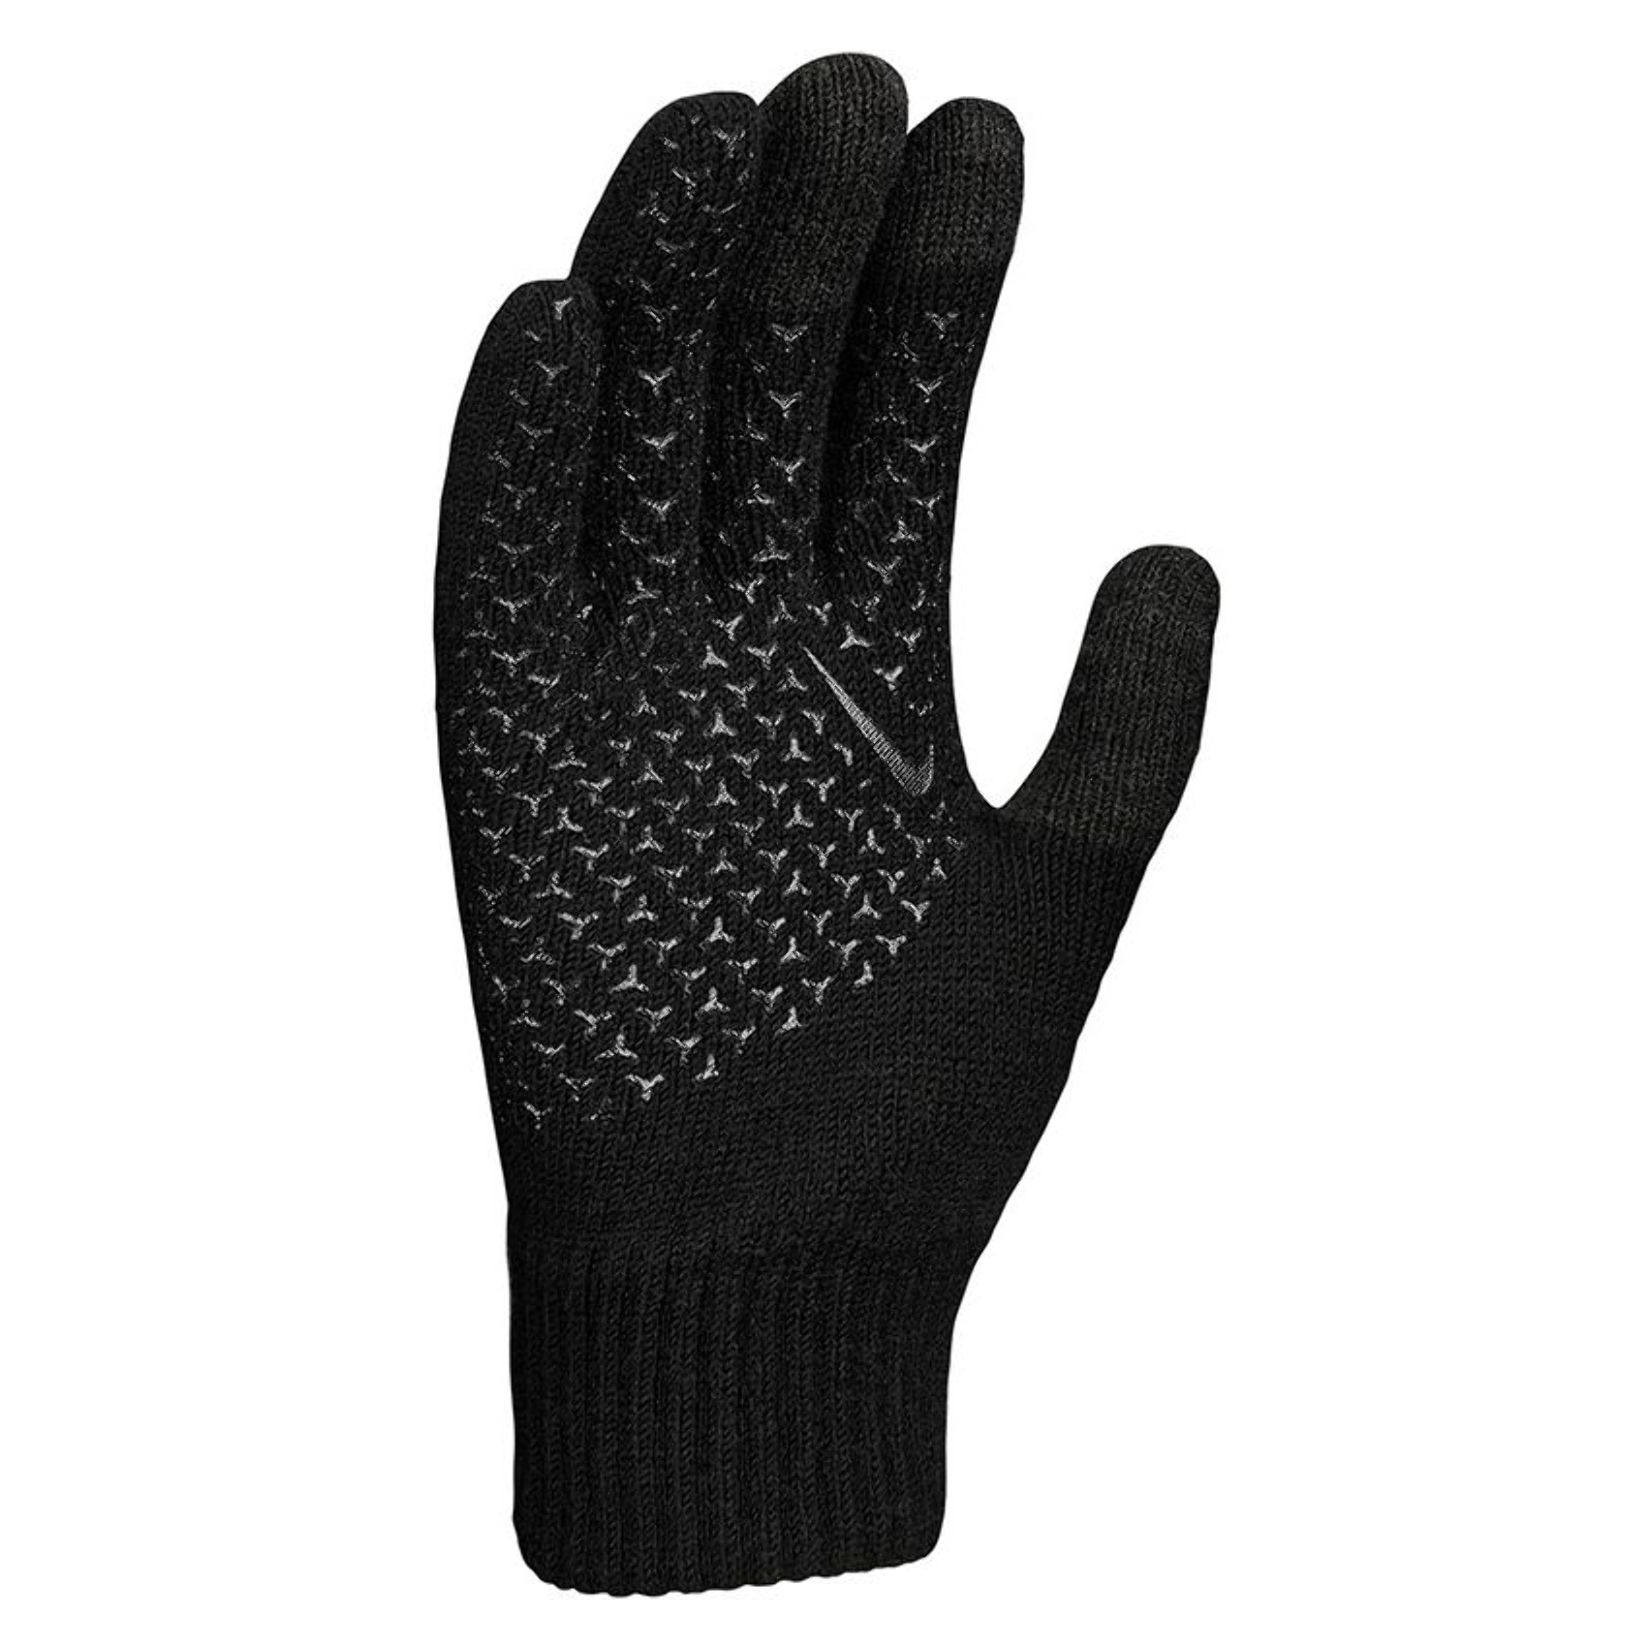 Nike Knitted Tech and Grip Gloves 2.0 - Kitlocker.com